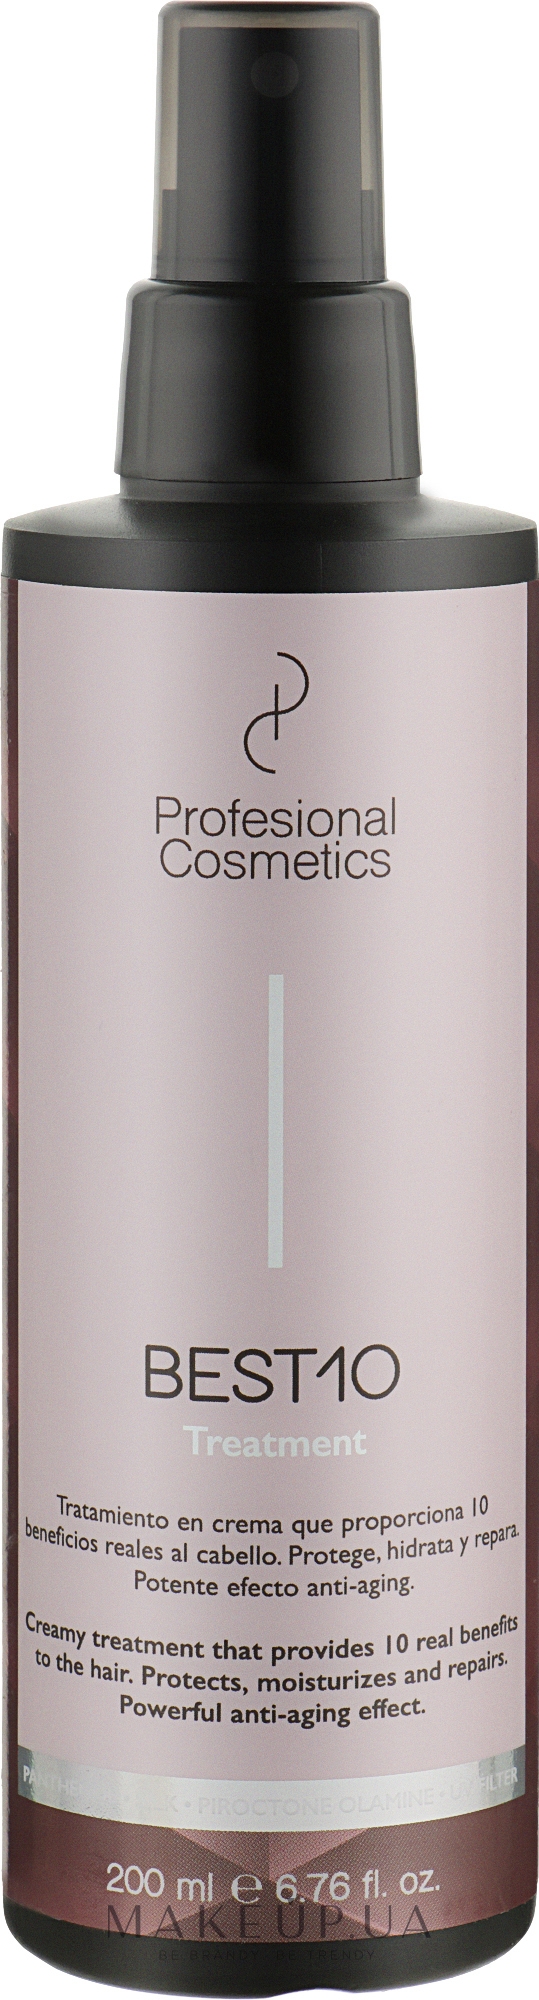 Експрес-кондиціонер для волосся - Profesional Cosmetics Best 10 Treatment Conditioner — фото 200ml